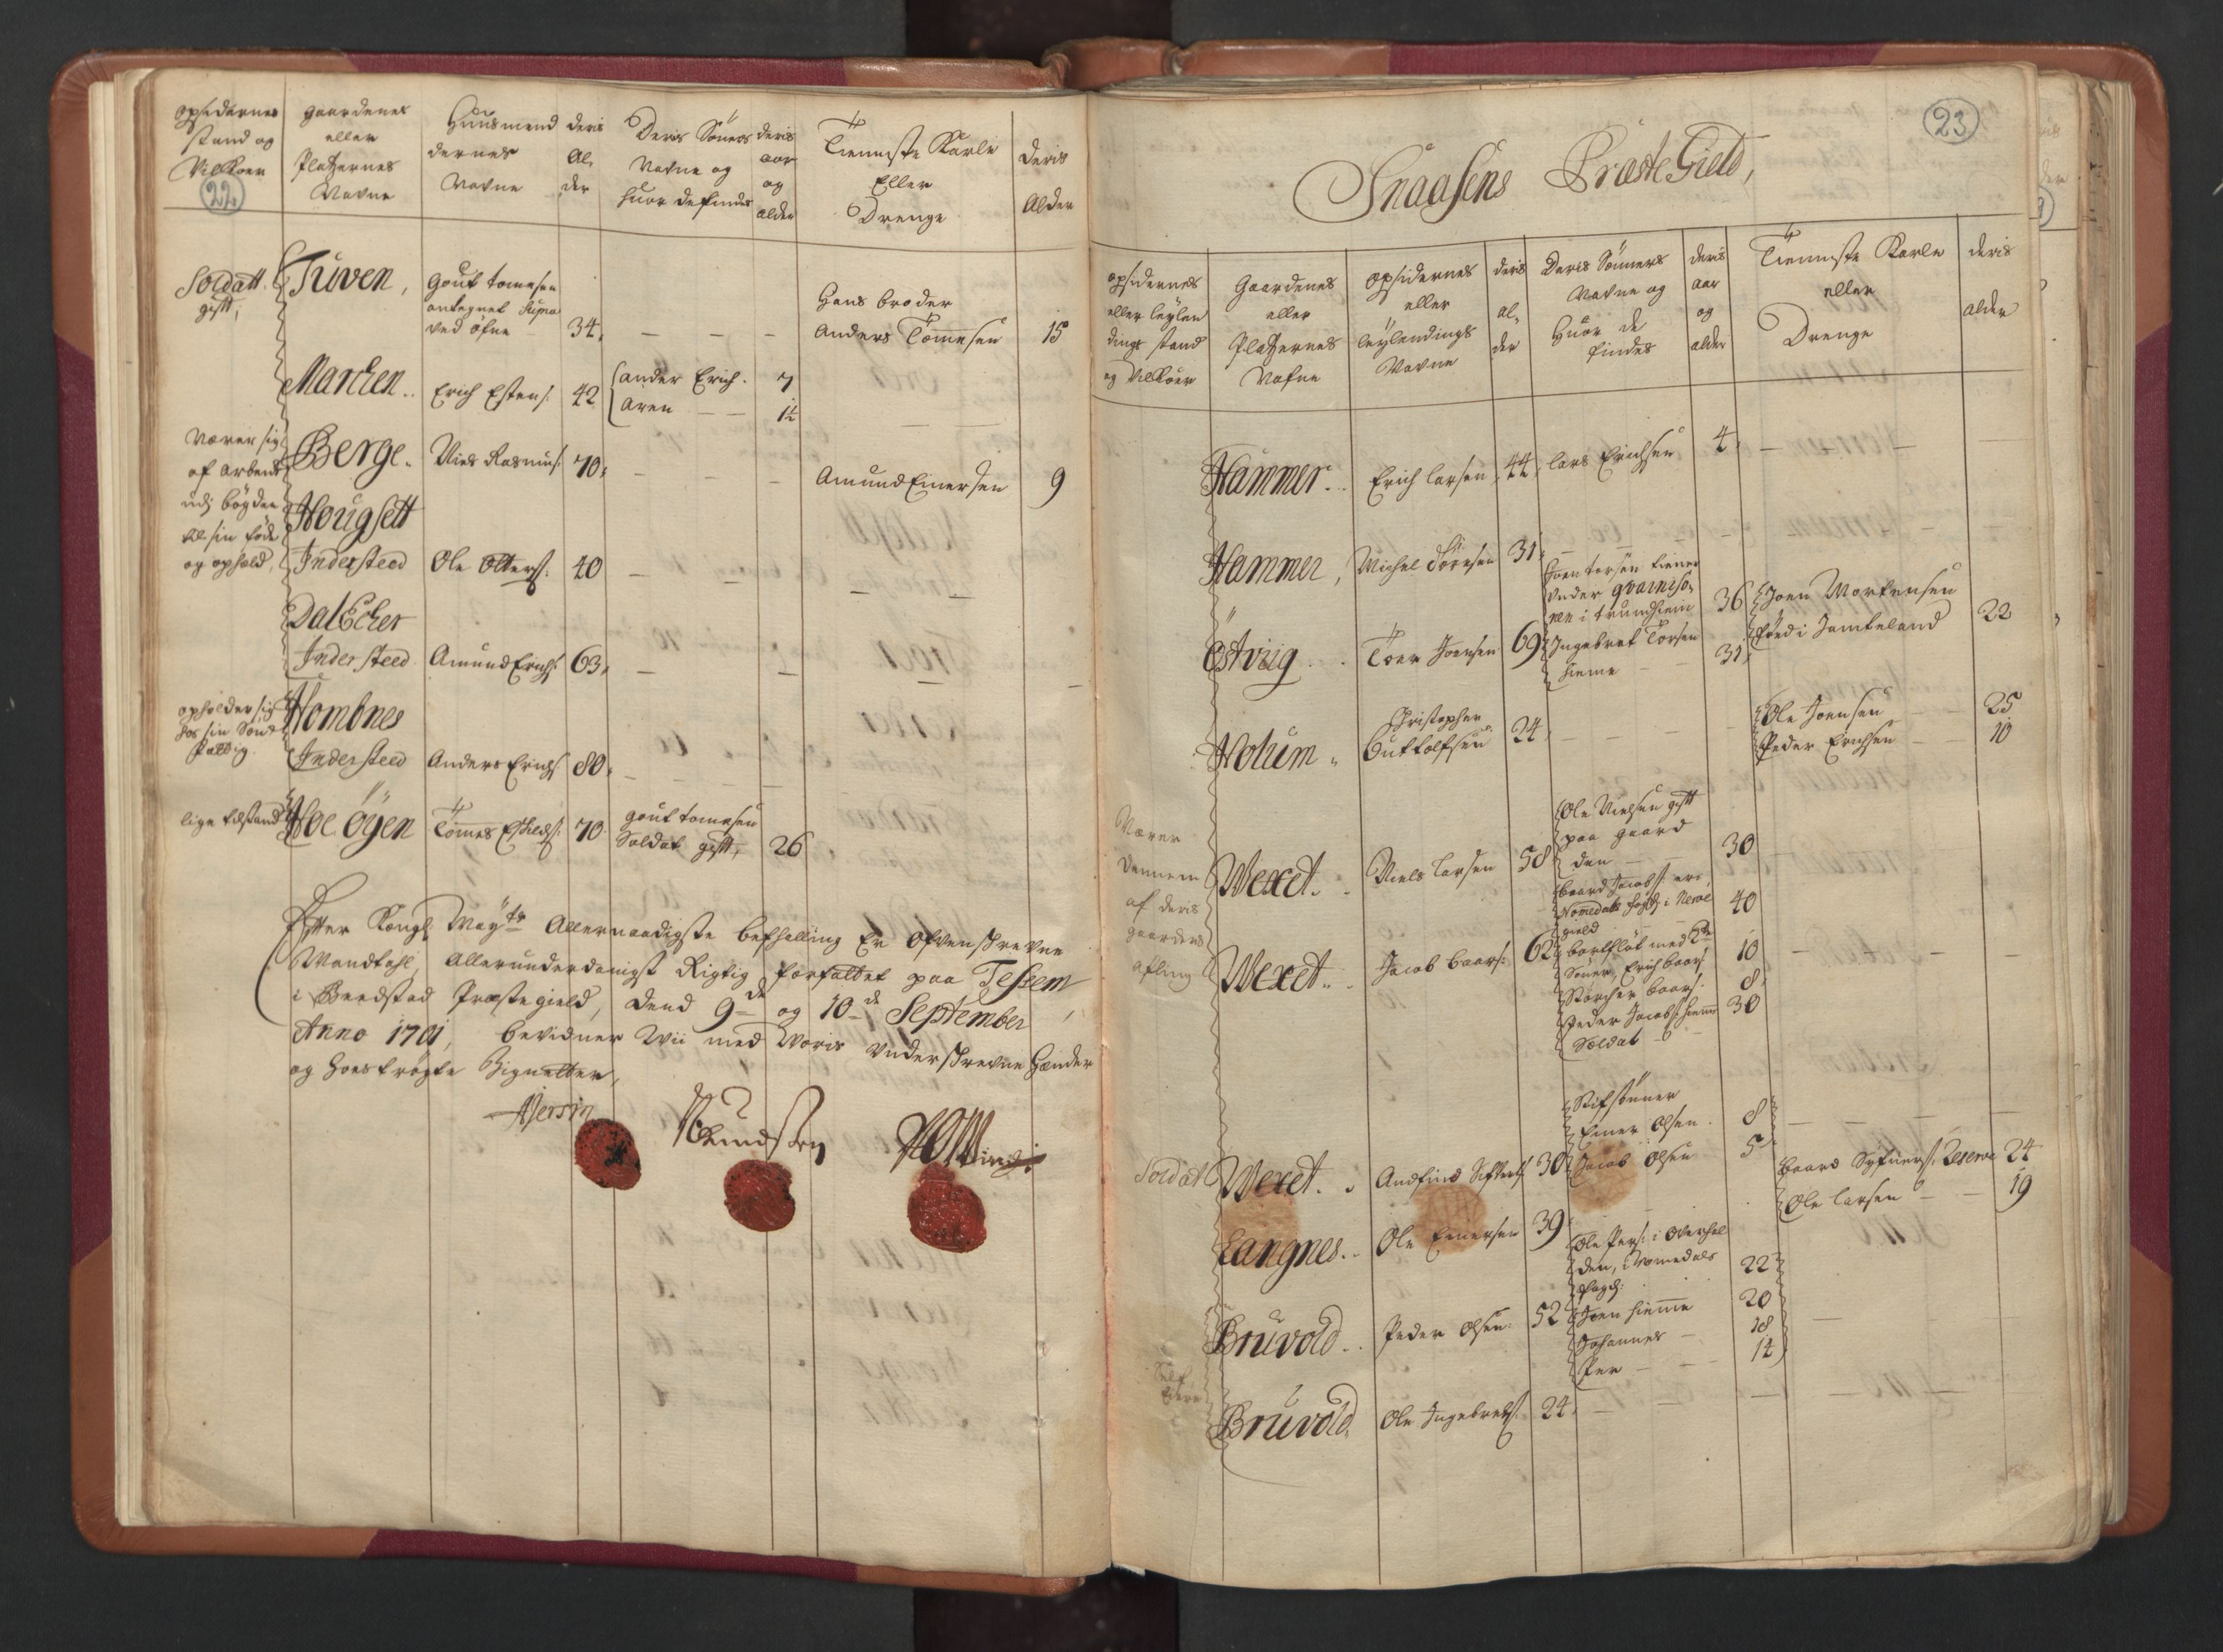 RA, Census (manntall) 1701, no. 15: Inderøy fogderi and Namdal fogderi, 1701, p. 22-23